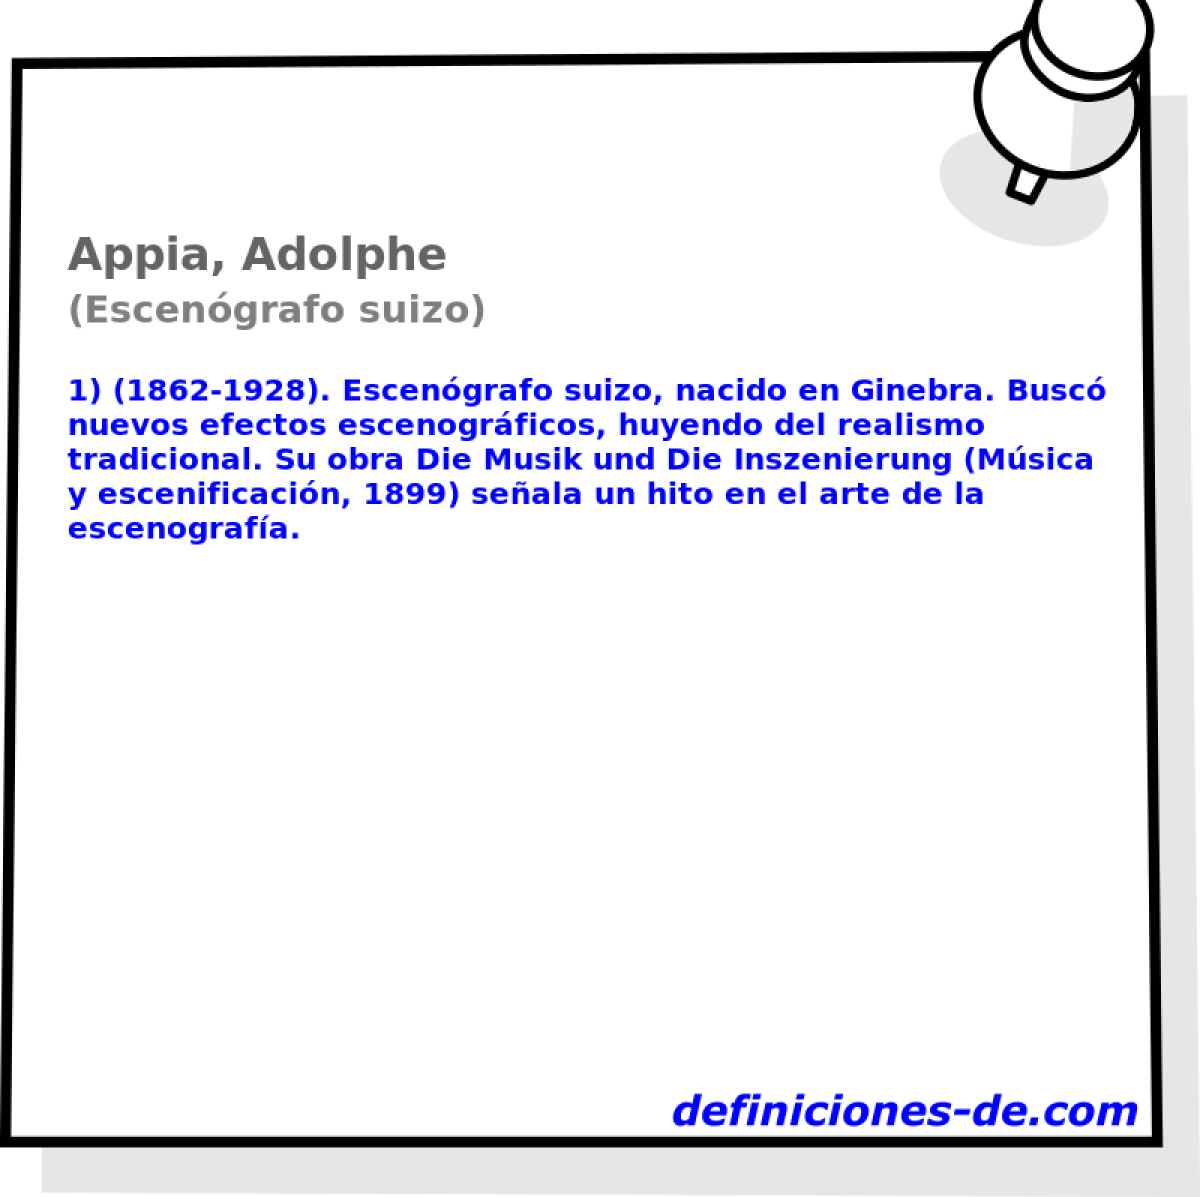 Appia, Adolphe (Escengrafo suizo)